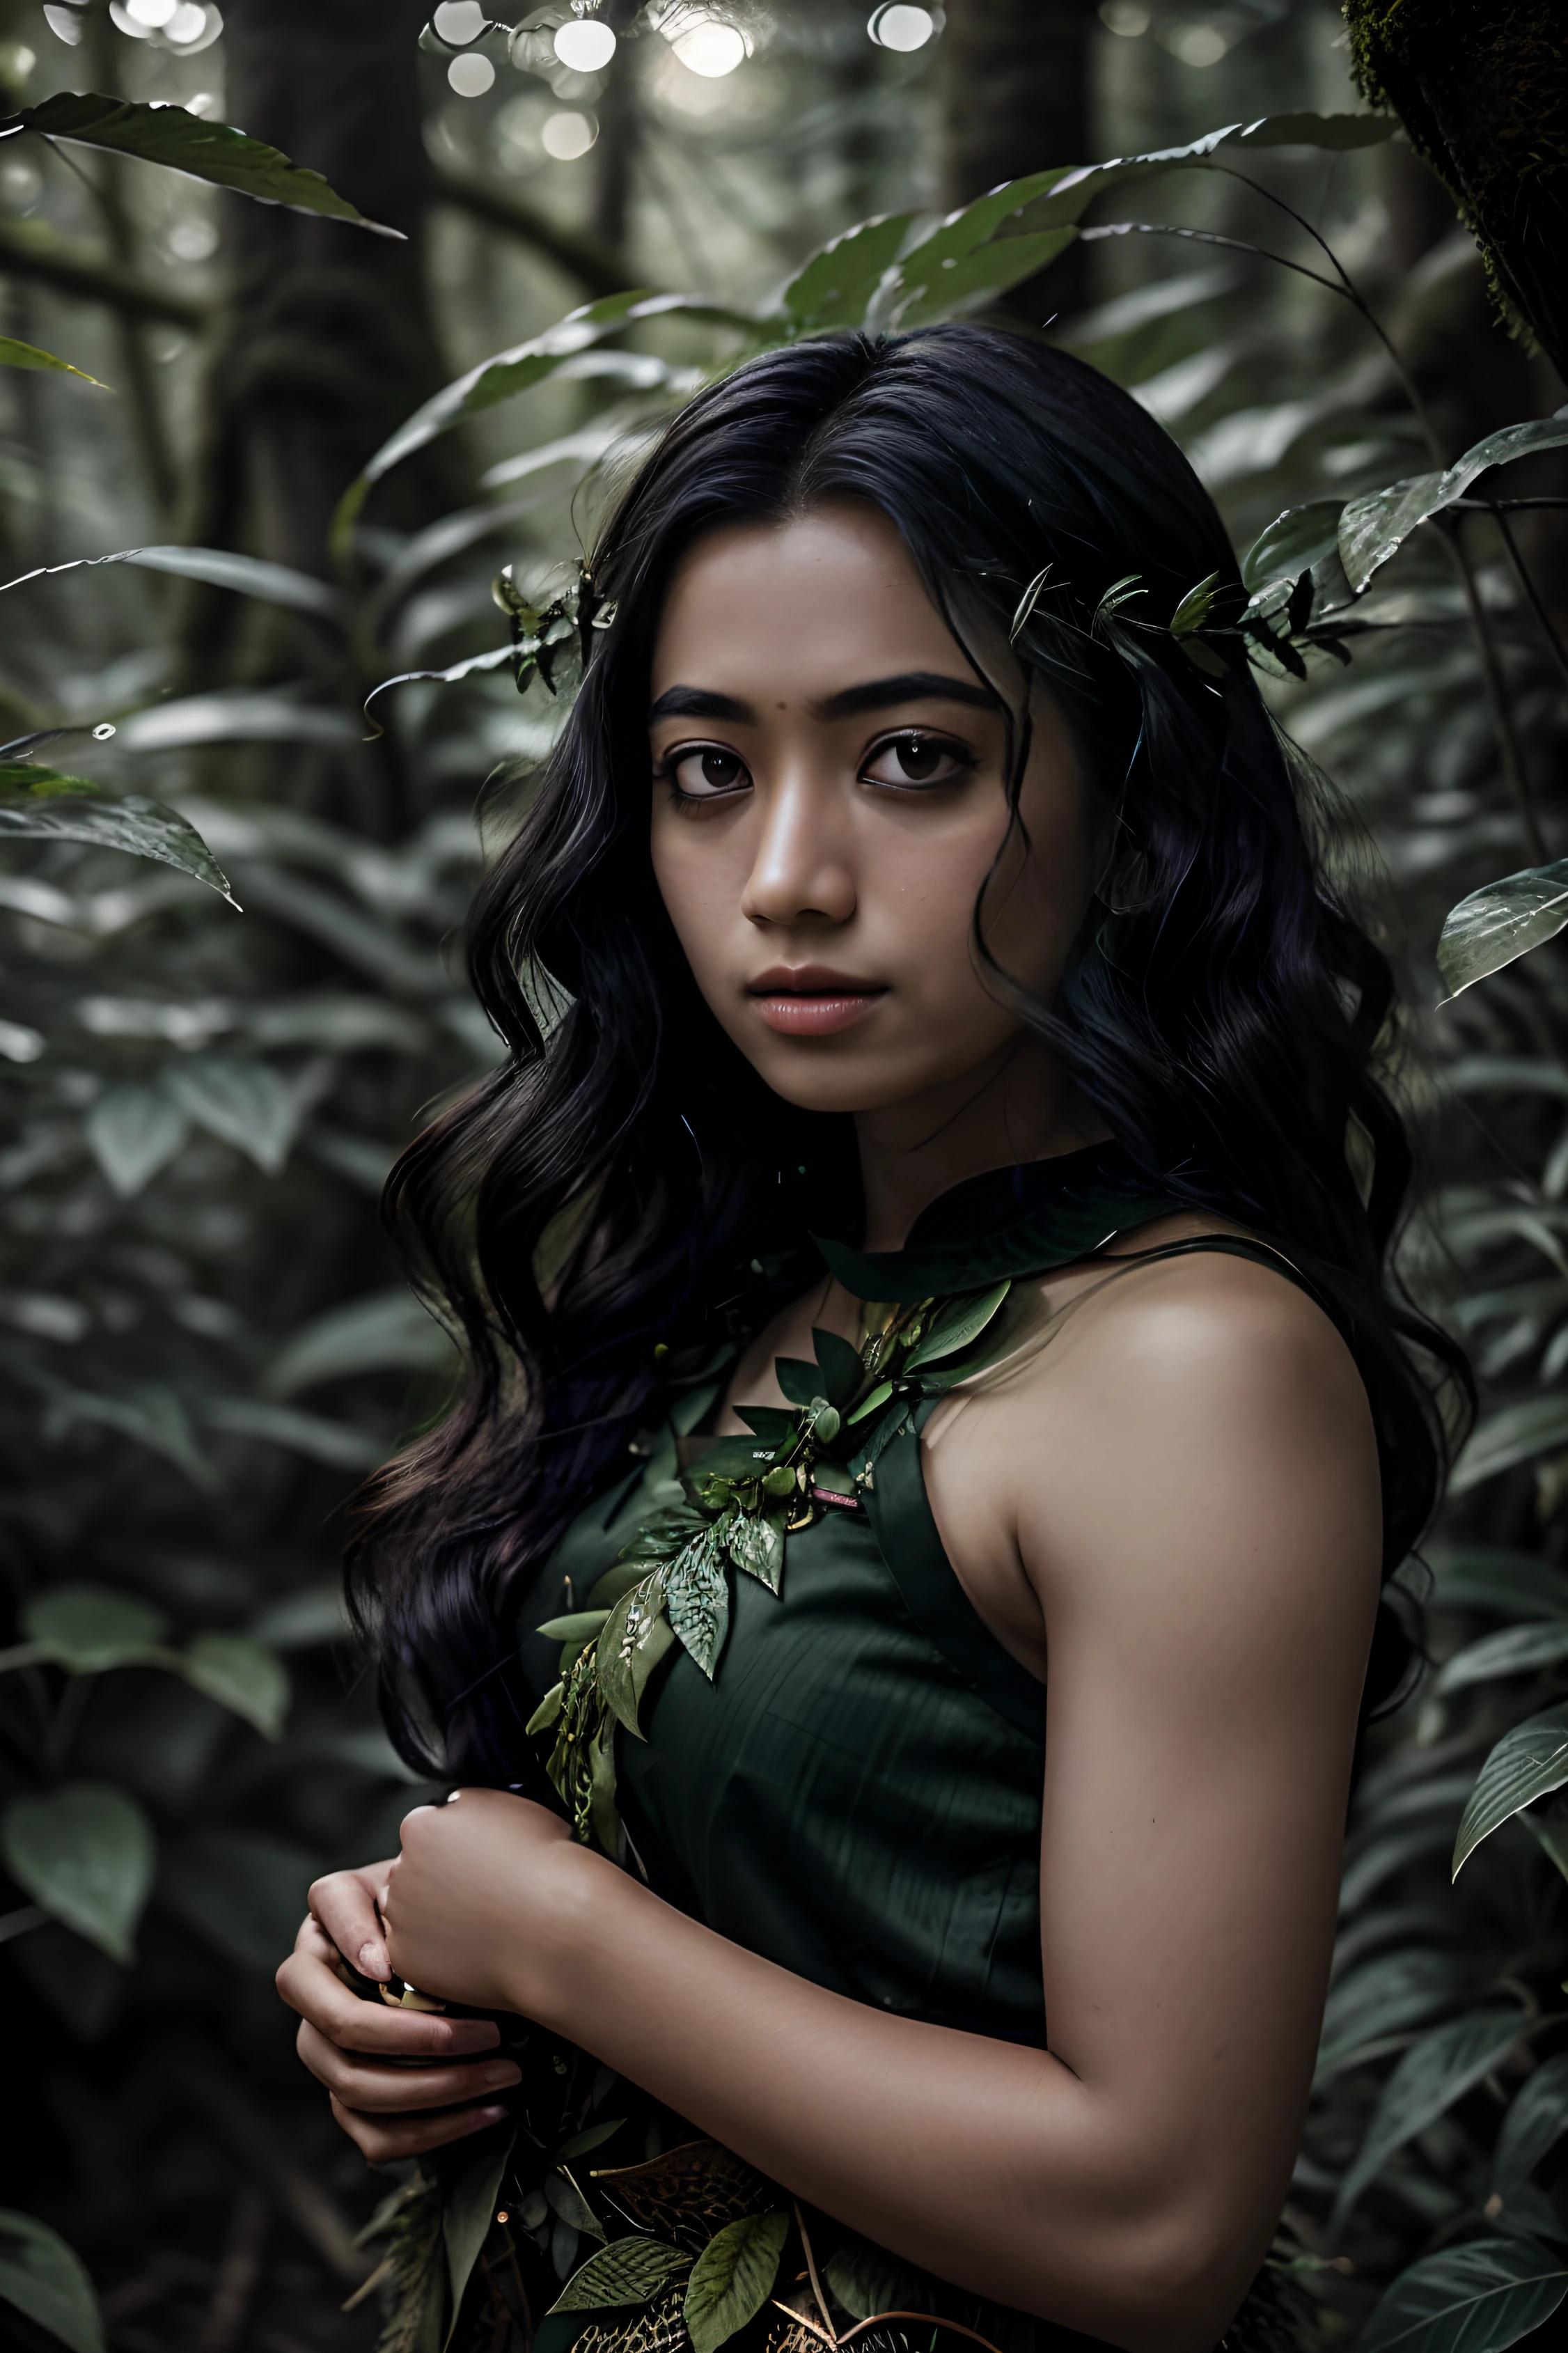 Portrait in 숲, 대자연 스타일의 나뭇잎, 녹색 잎으로 만든 머리카락, 꿈같은, 젊은 흑인 여성,인도네시아 인, UHD, 숲 goddess, 요정, 짙은 녹색 옷, 숲, 떨어지는 잎들, 입자, 최고의 품질, 포즈, 상체, 뷰어를보고, 4조 조명된, 림 라이트, 아름다운 예술 작품, 완벽한 구성